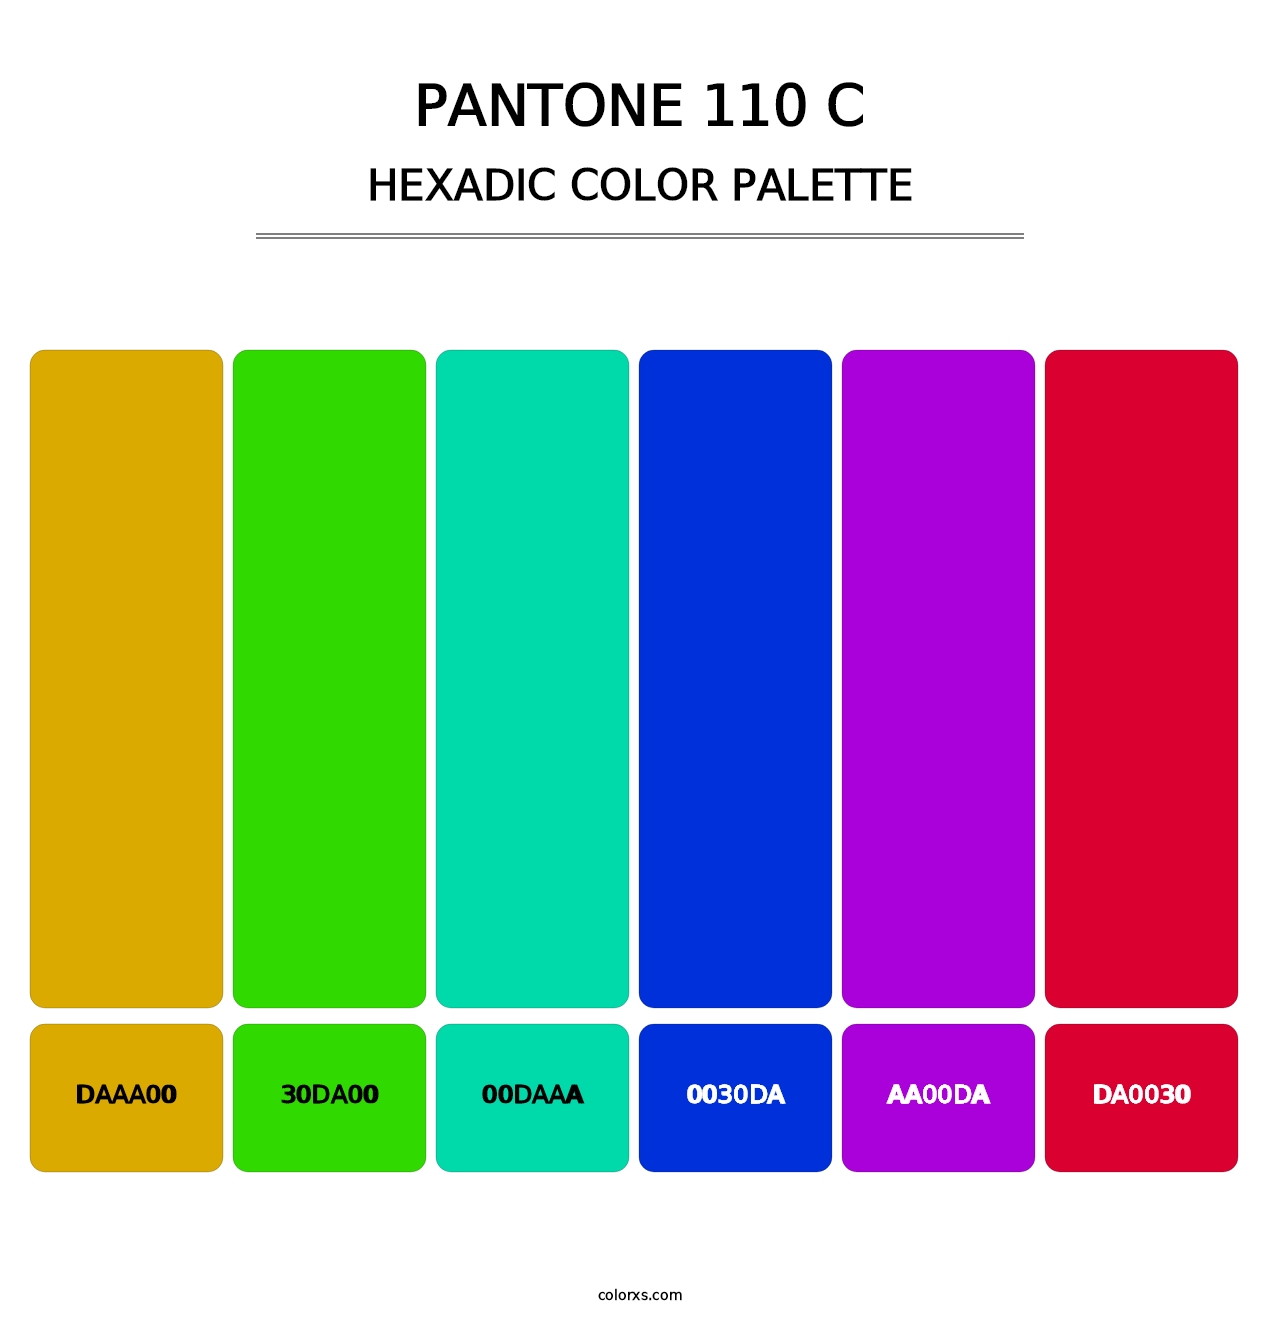 PANTONE 110 C - Hexadic Color Palette